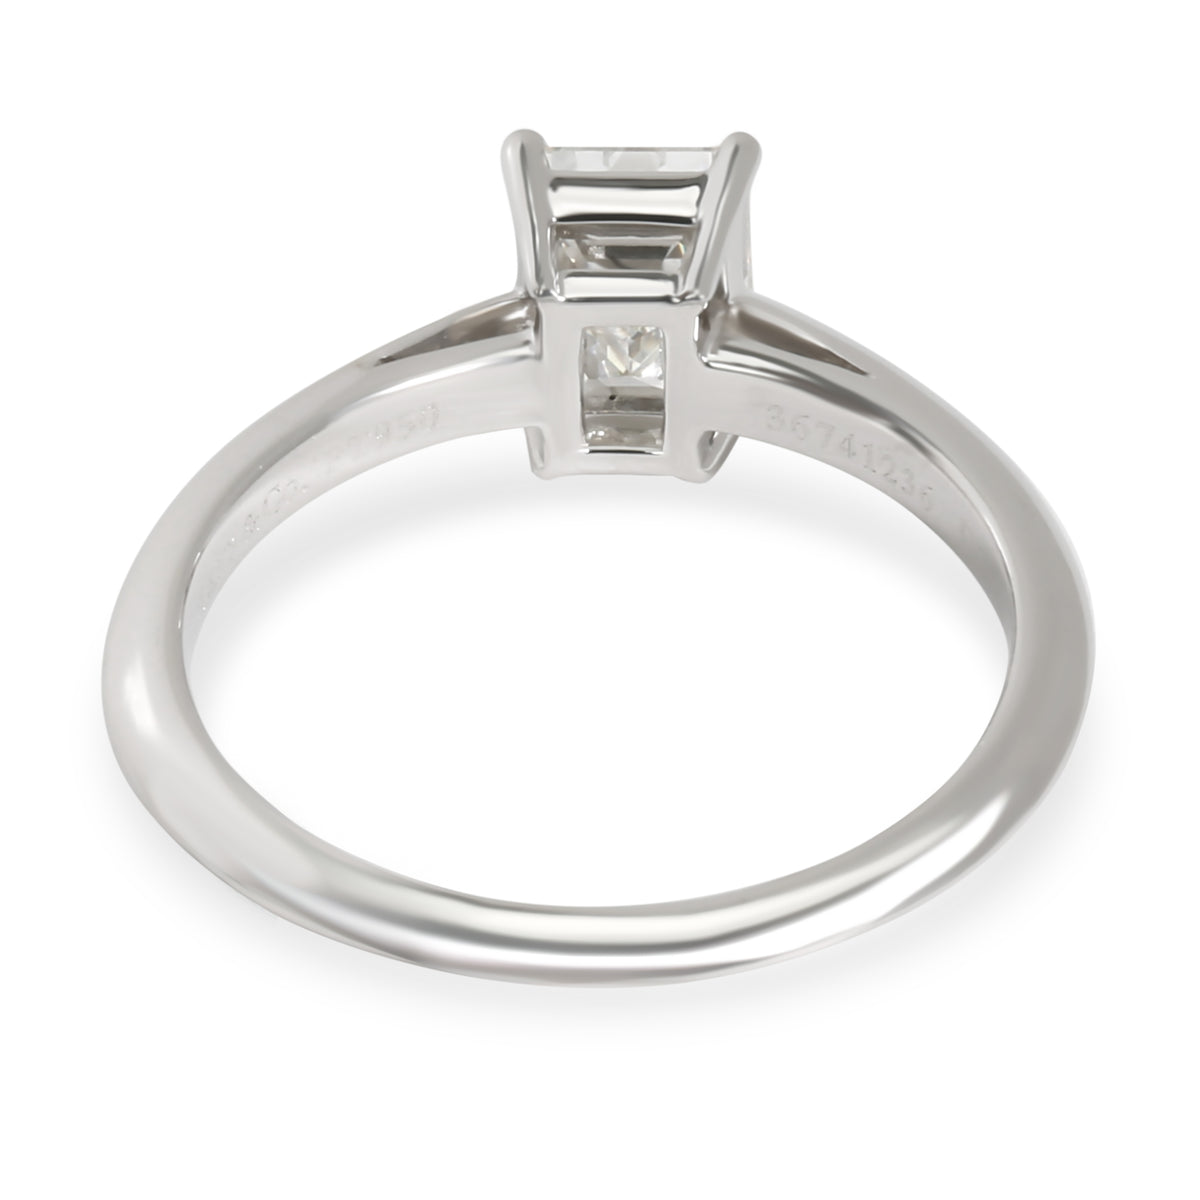 Tiffany & Co. Emerald Diamond Engagement Ring in Platinum H VVS2 1.14 CTW